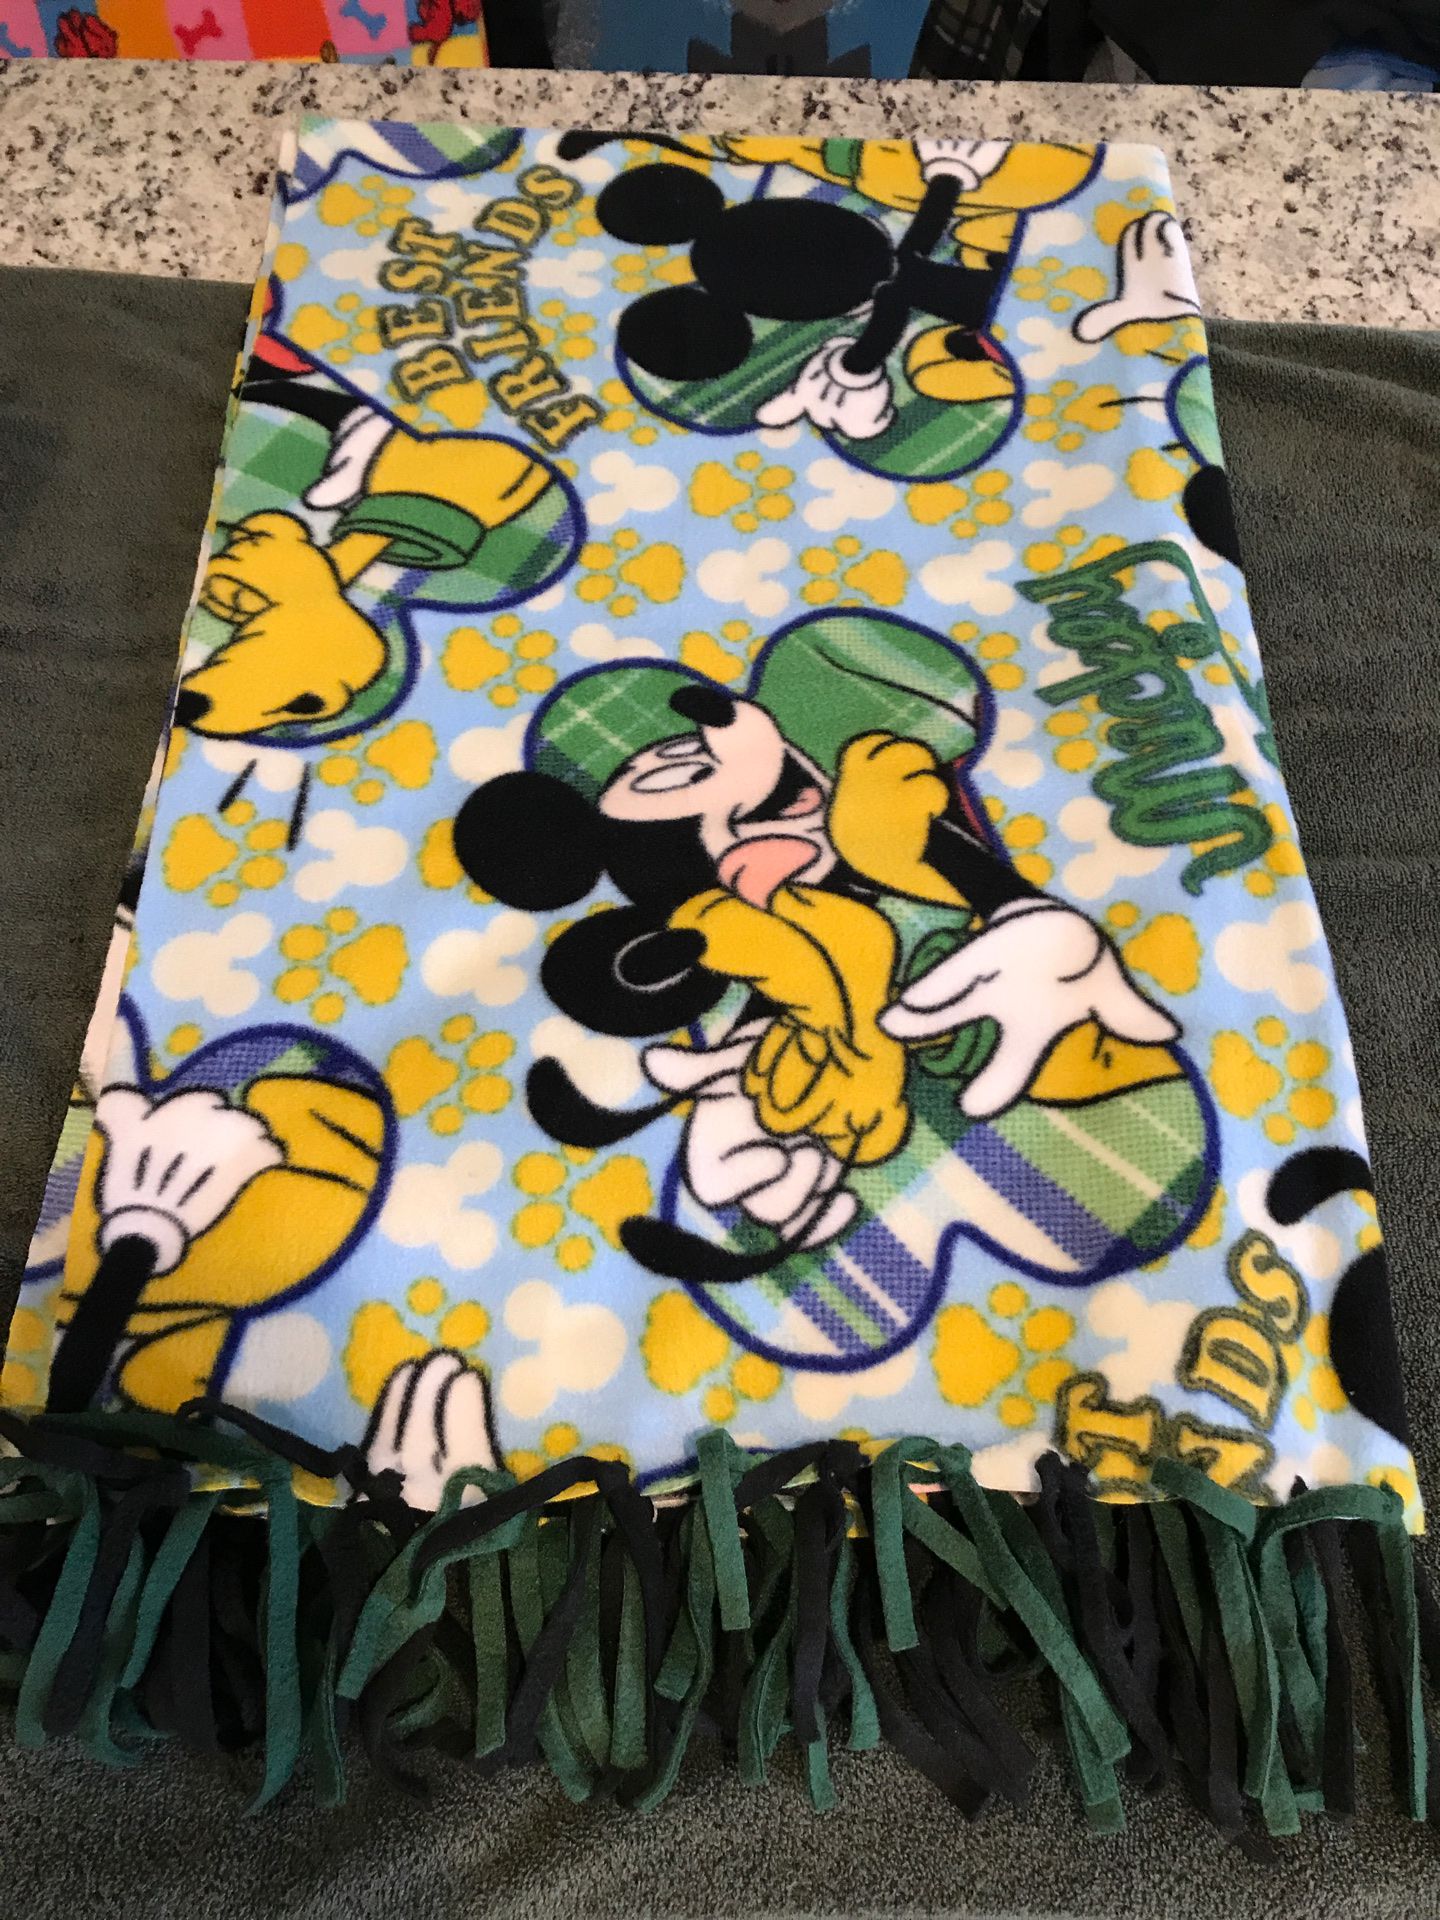 Handcrafted fleece blanket 3’ x 5’ Mickey and Pluto